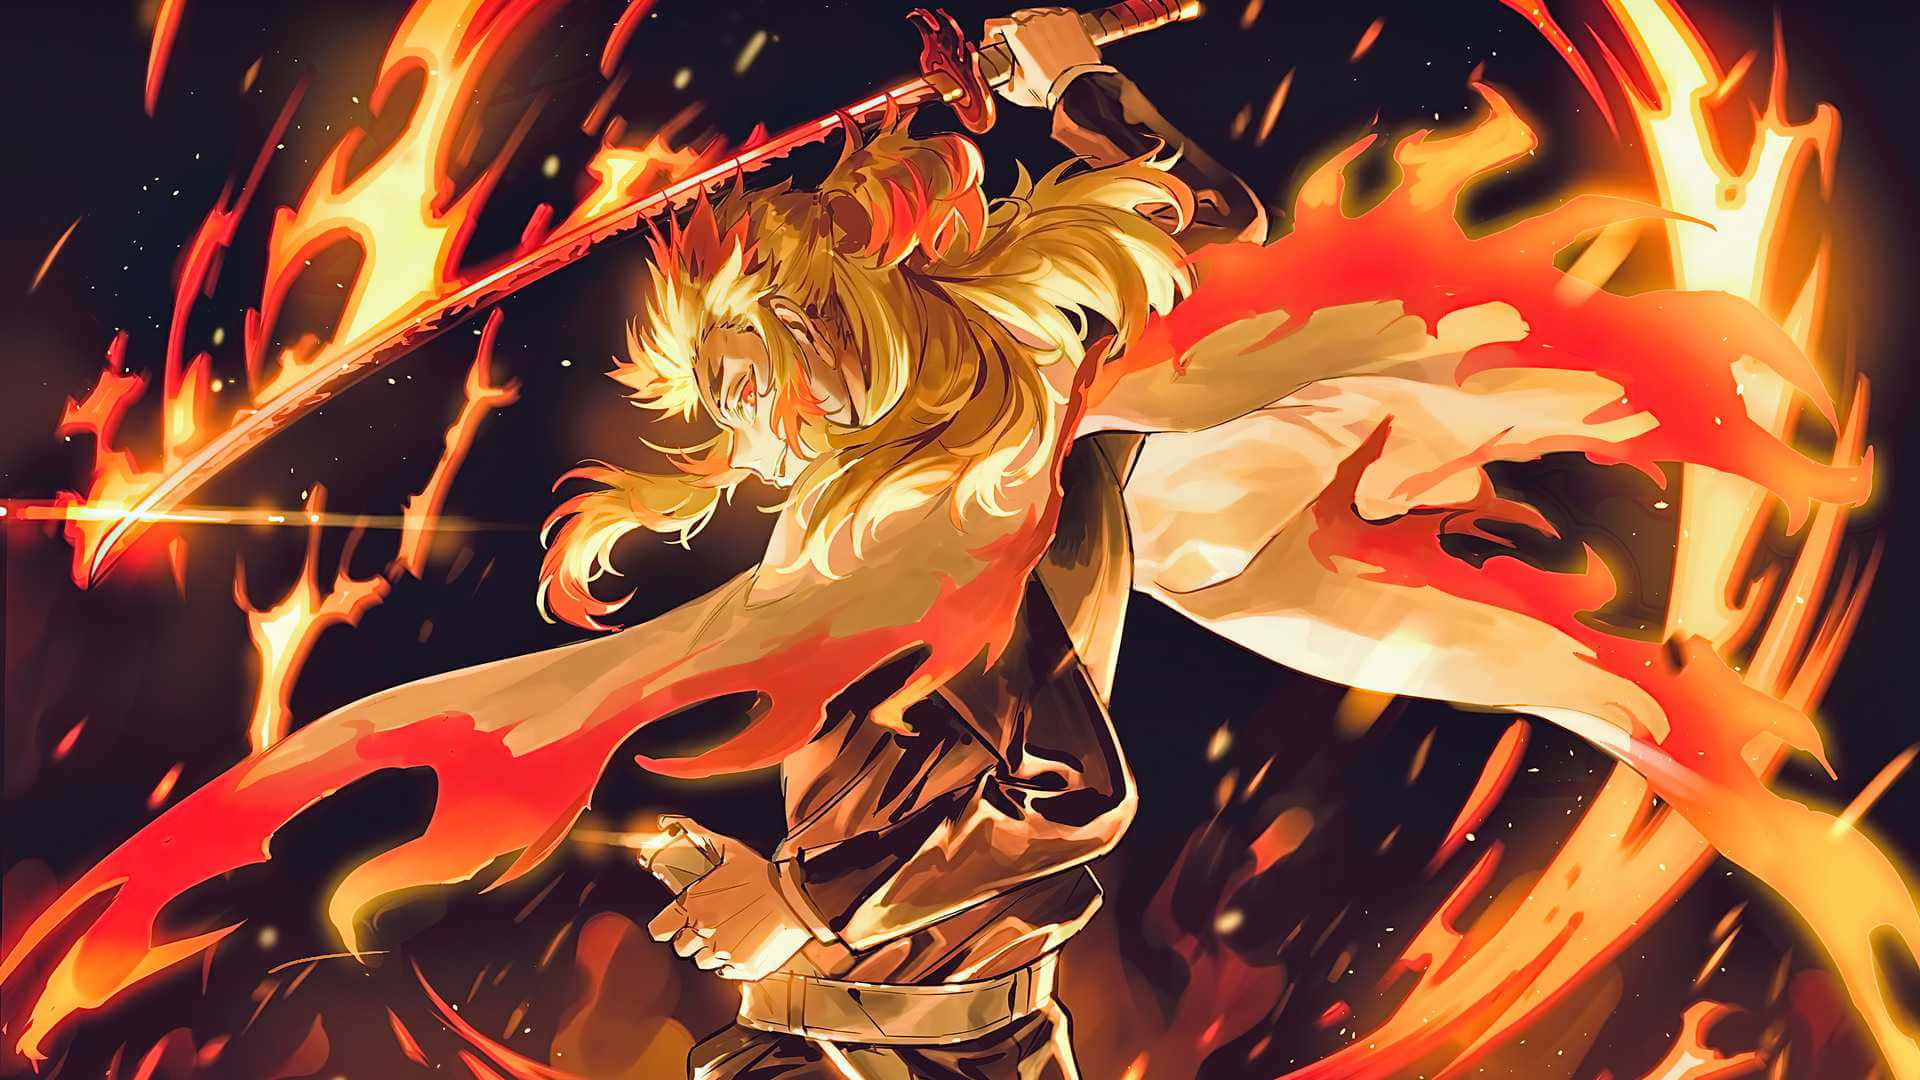 Rengoku - The Flame Hashira from Demon Slayer